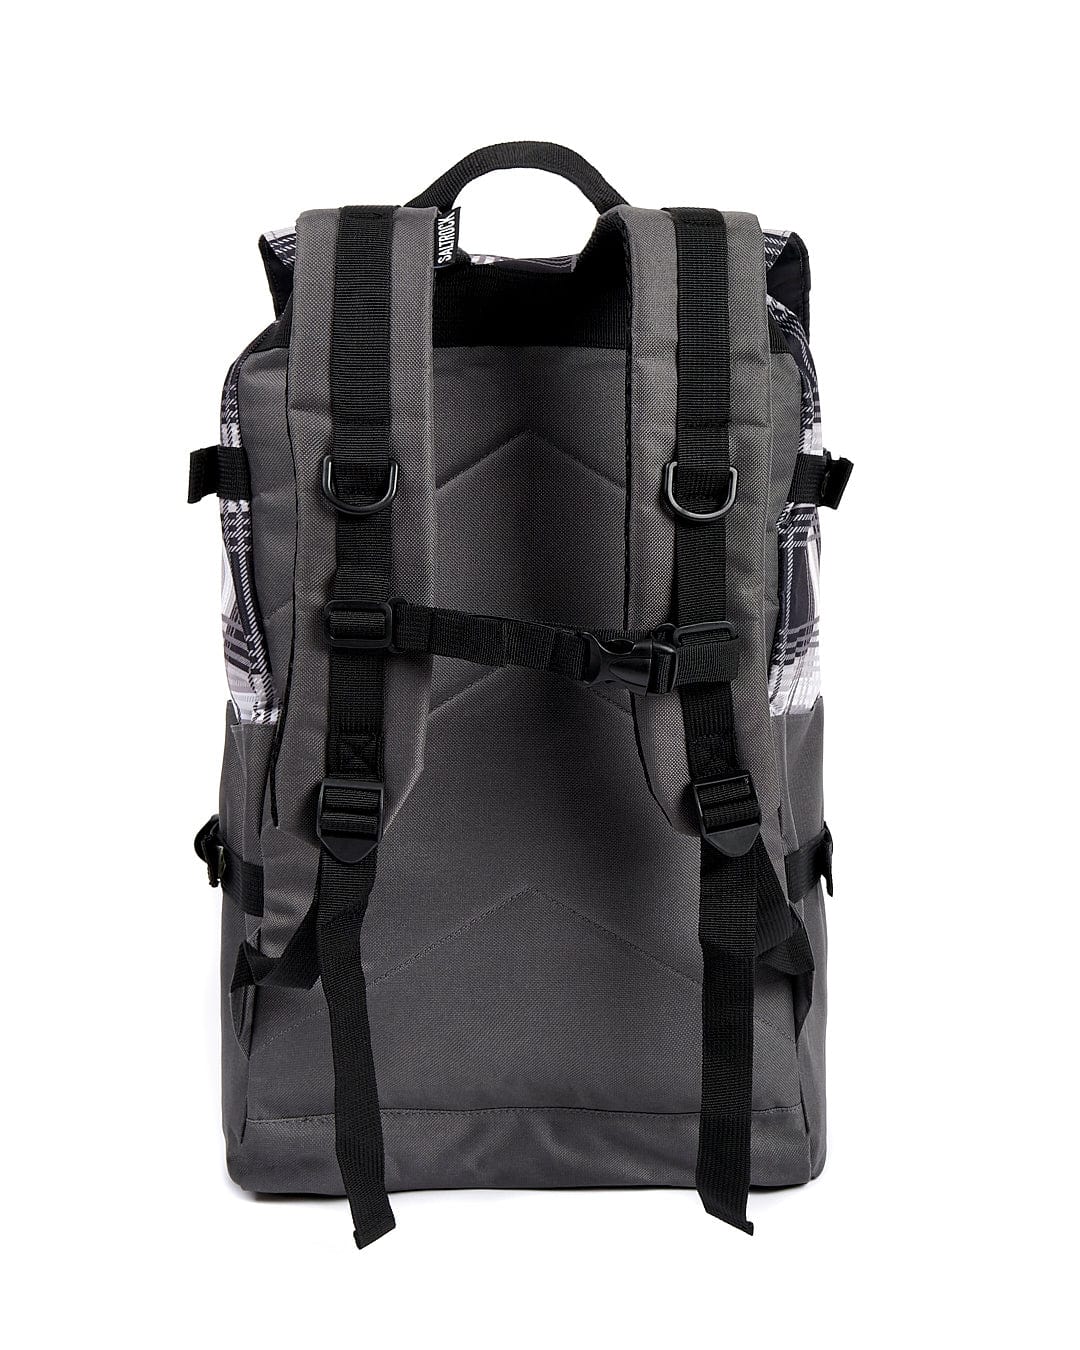 A Saltrock Top Loader - Backpack - Grey backpack with straps.